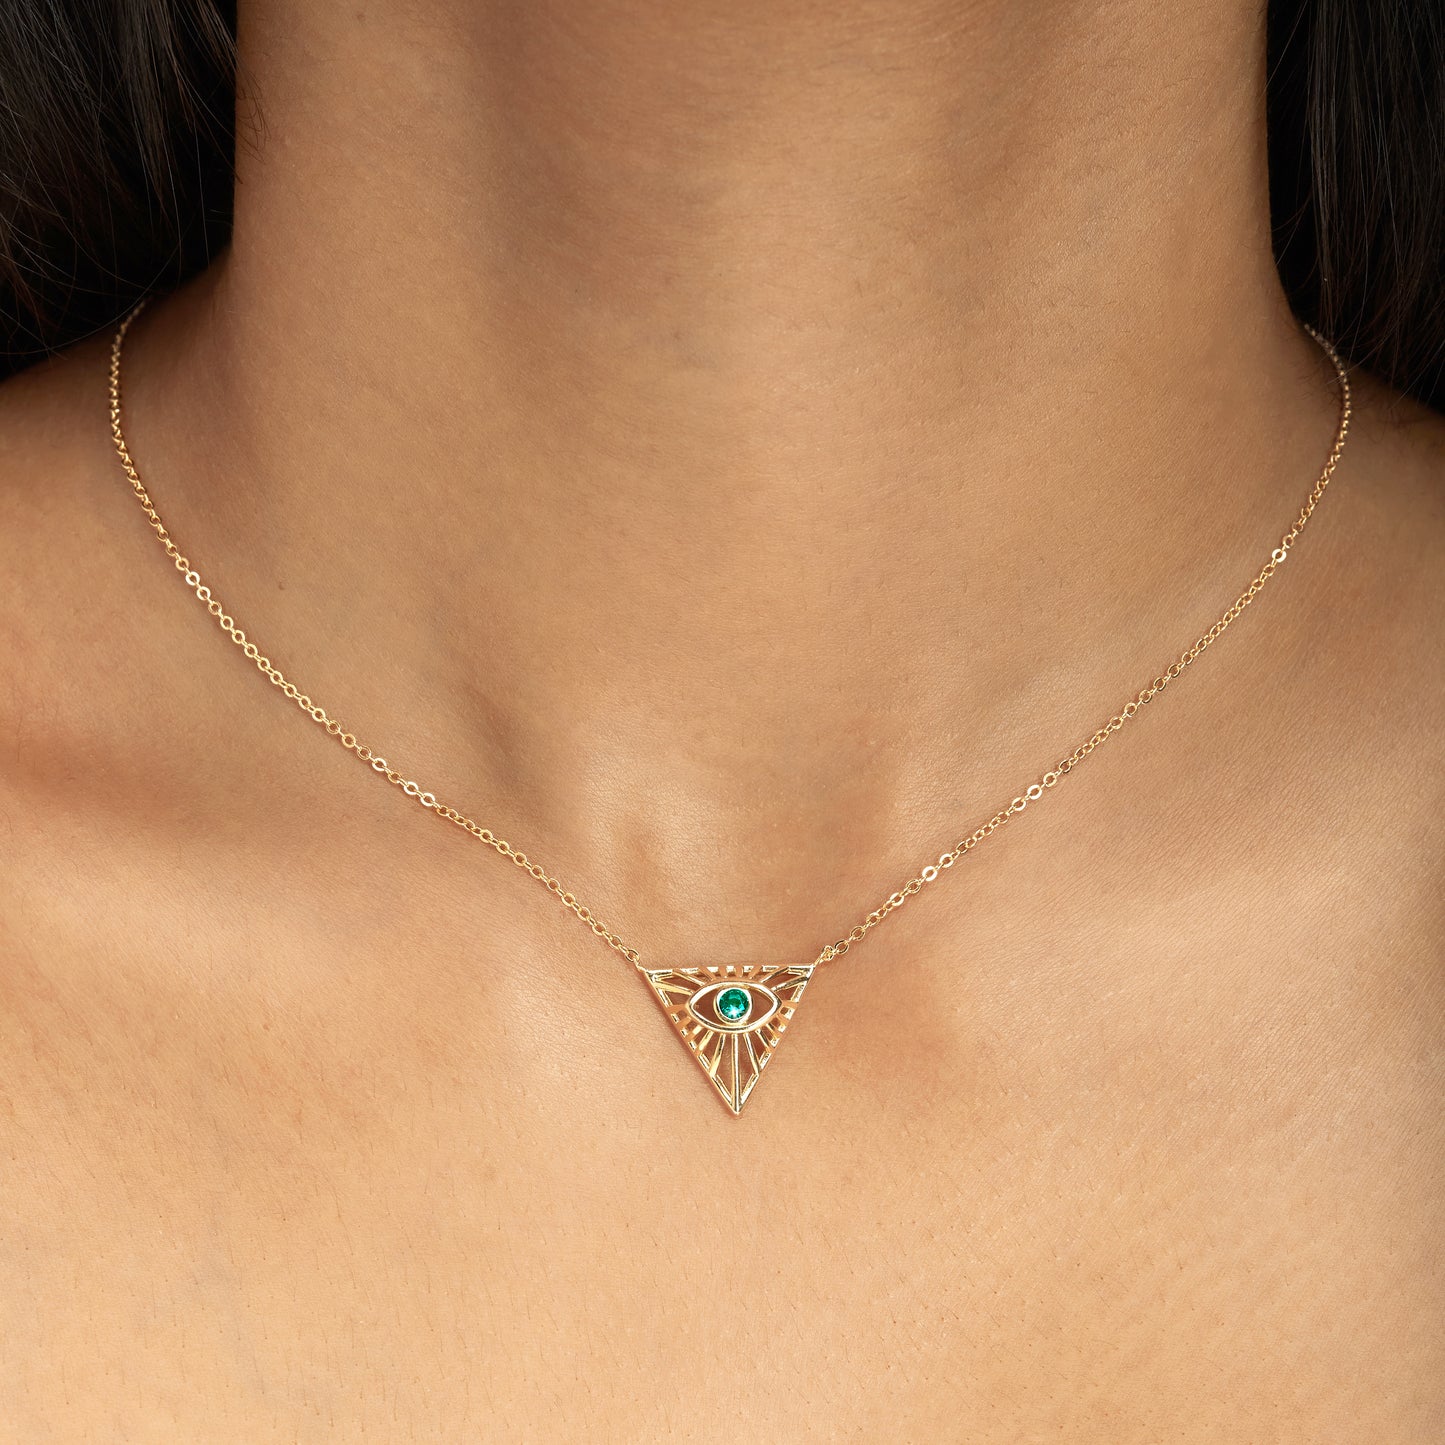 Topfoxx Jewelry - Topfoxx Jewelry- Monet Manifester - Sterling Silver Necklace Emerald Green Crystal - Sterling Silver Necklace Emerald Green Crystal - model 